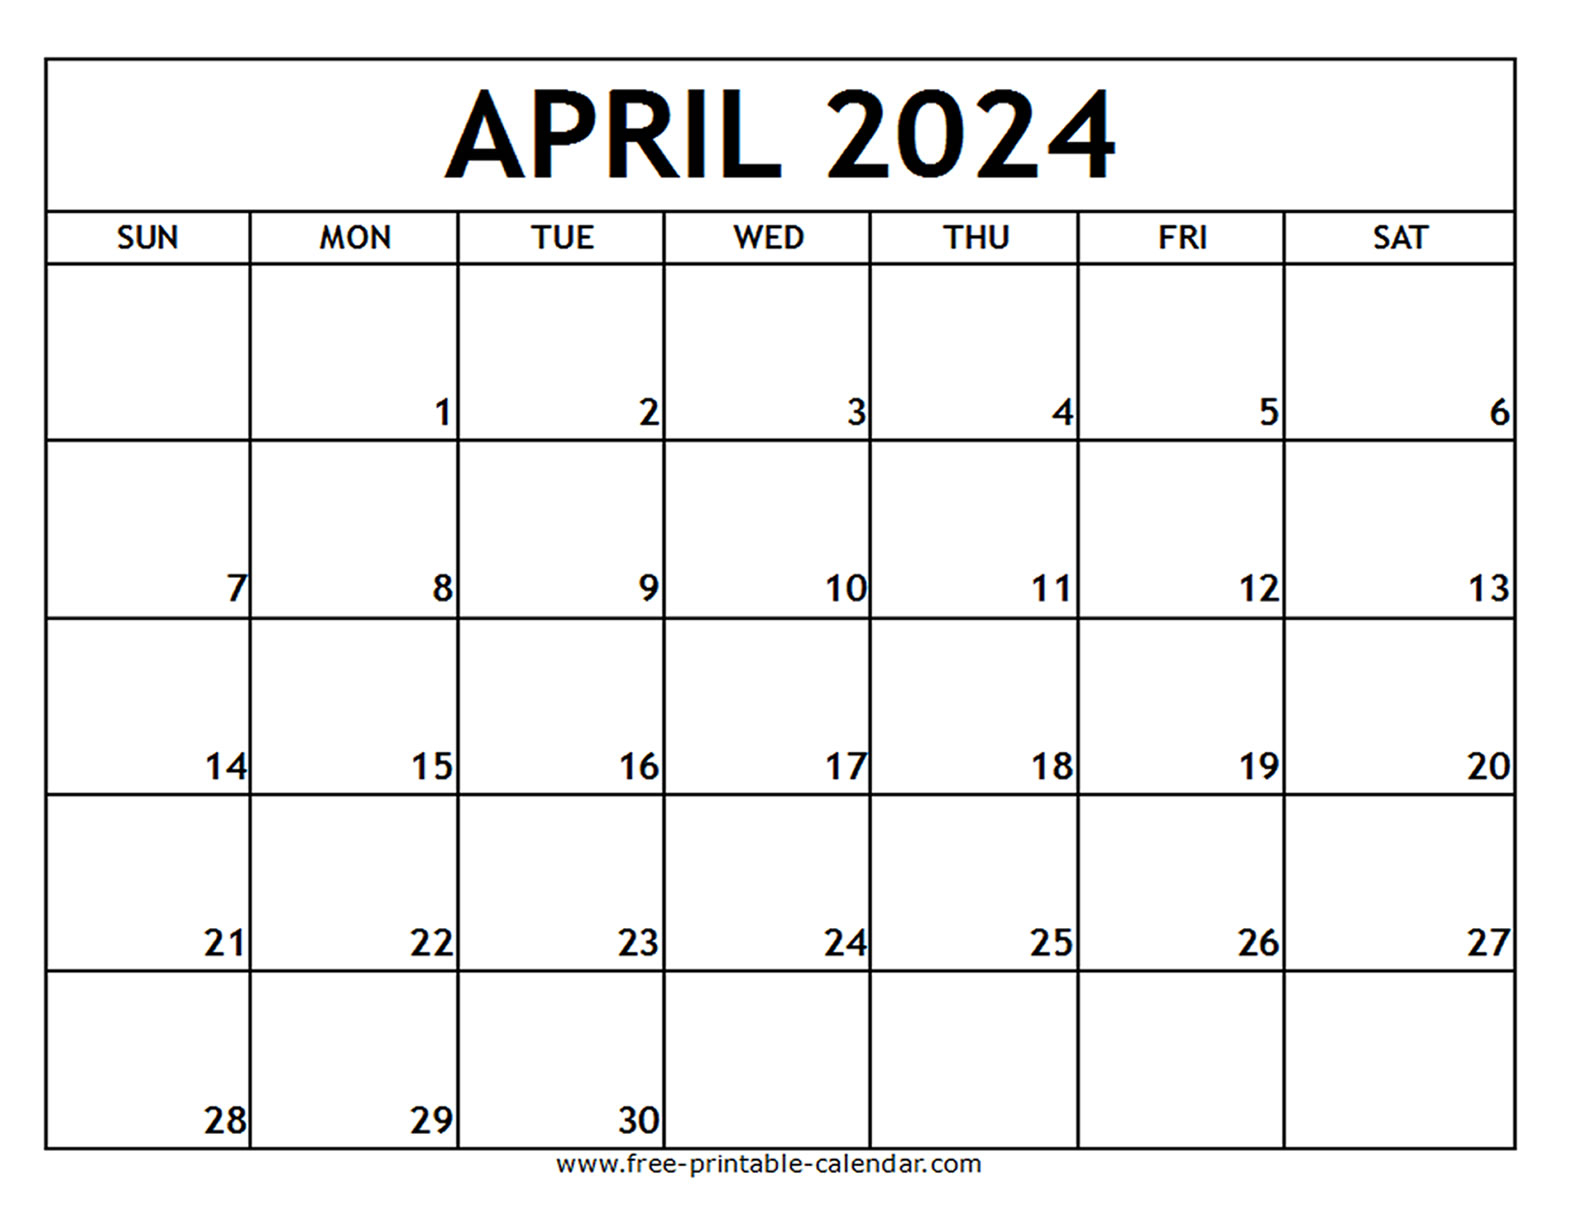 April 2024 Printable Calendar - Free-Printable-Calendar within April 2024 Calendar Template